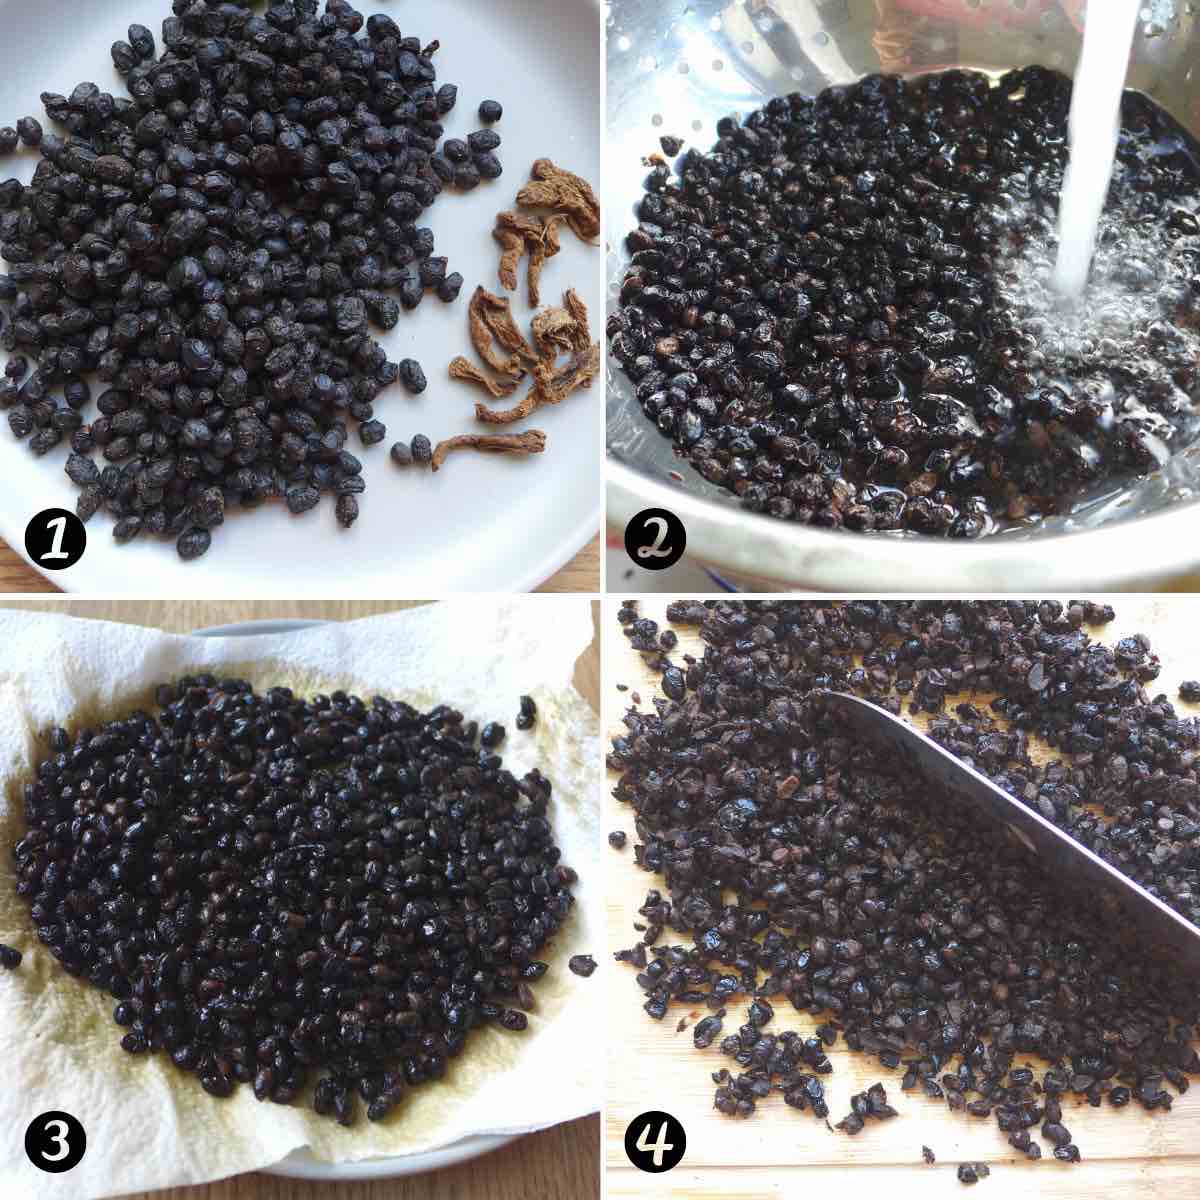 4 steps of preparing fermented black beans.